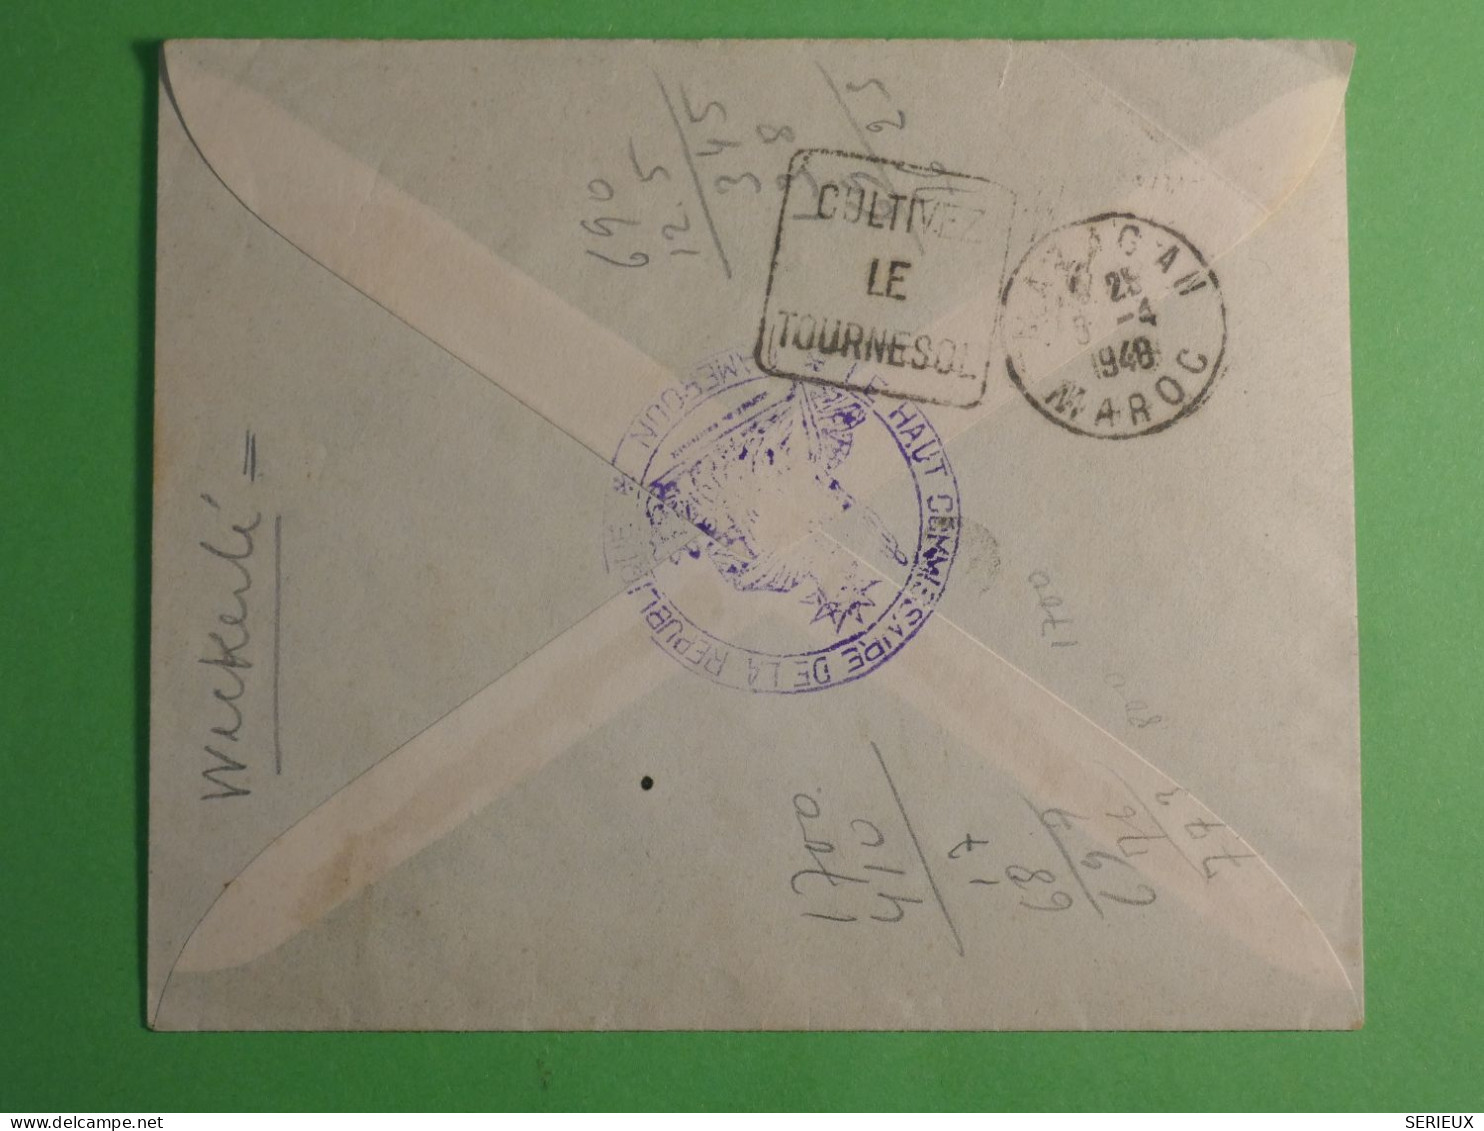 DN9 CAMEROUN  LETTRE OFFICIELLE  1949  A MAZAGAN  MAROC  ++  AEROPHILATELIE + AFF.  INTERESSANT+++ - Storia Postale